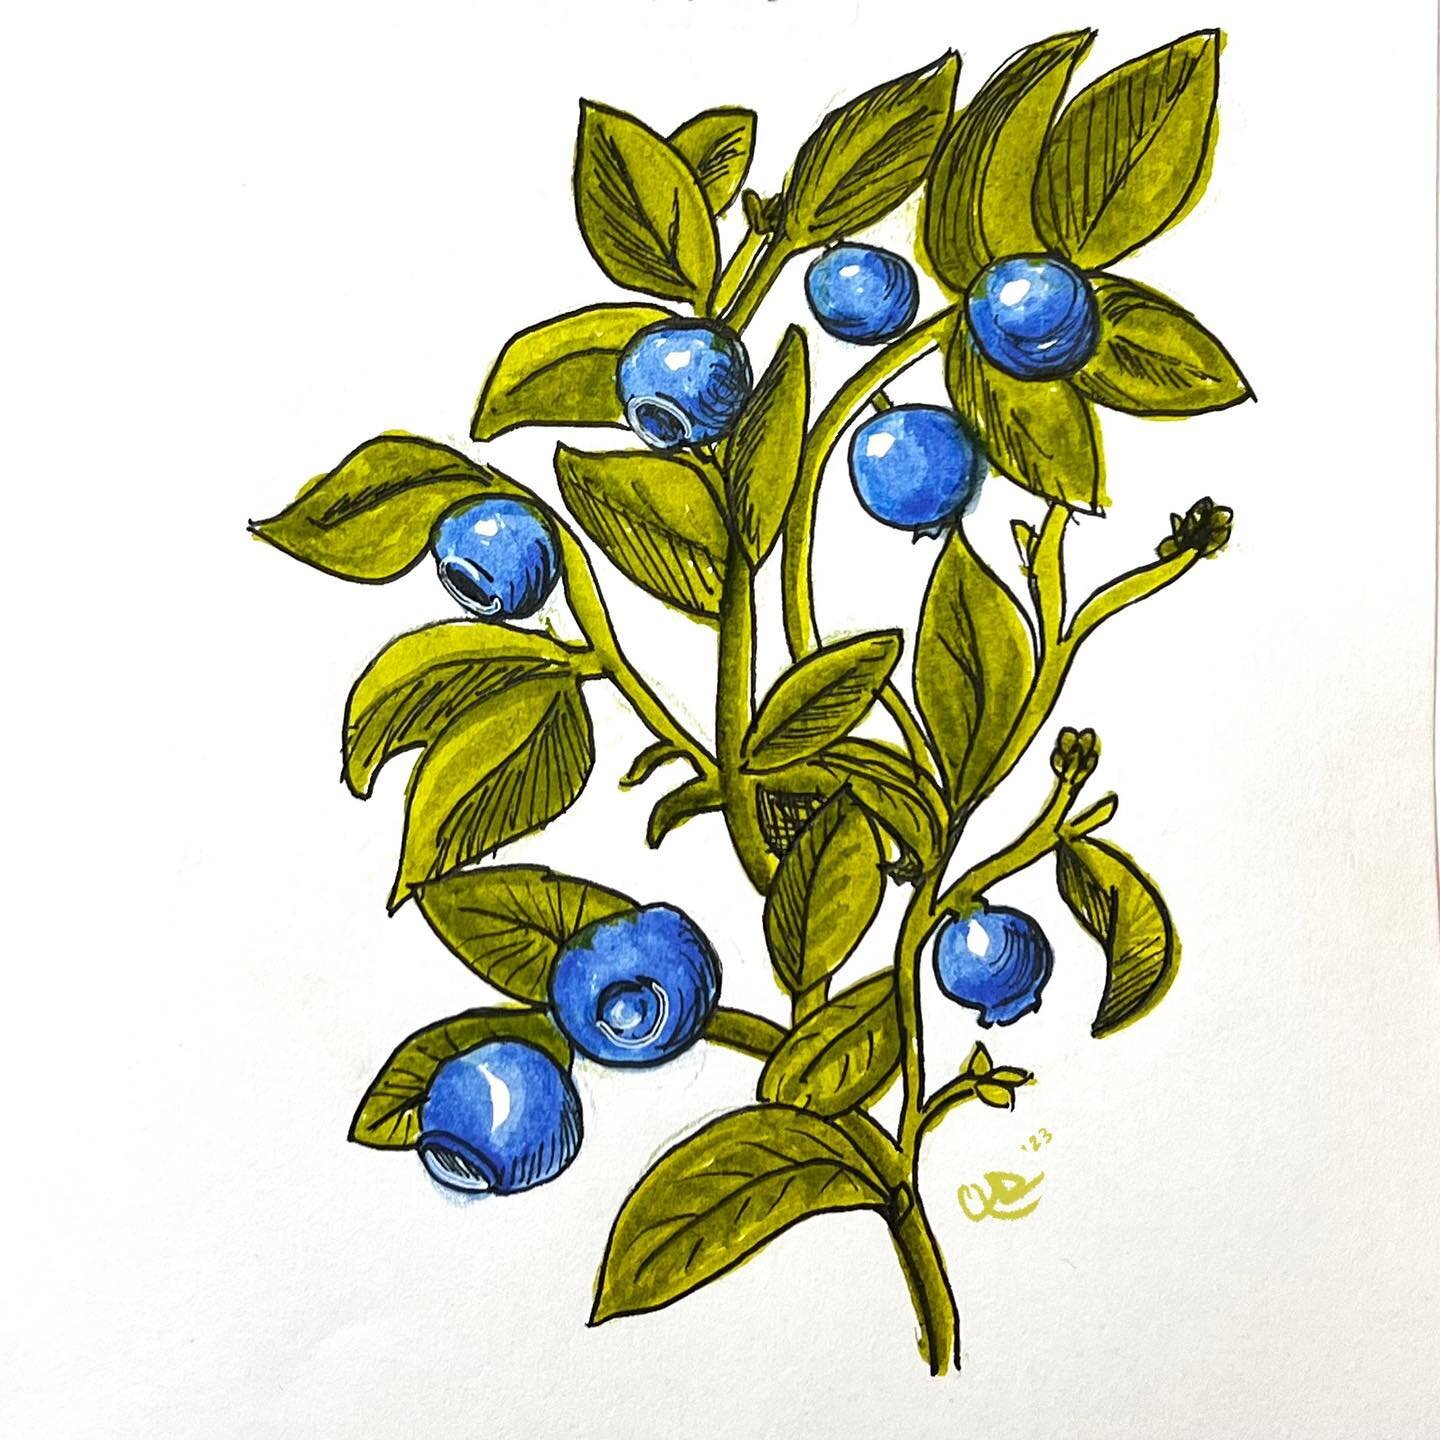 #falliscoming But first, blueberries! 🫐🌿
#newenglandartist 
.
.
.
.
.
.
.
.
.
.
#illustration #illustrationartists #artistsoninstagram #blueberries #blueberryart #illustrator #mixedmedia #sketchbook #artstudent #artstudy #sketch #artoftheday #emerg